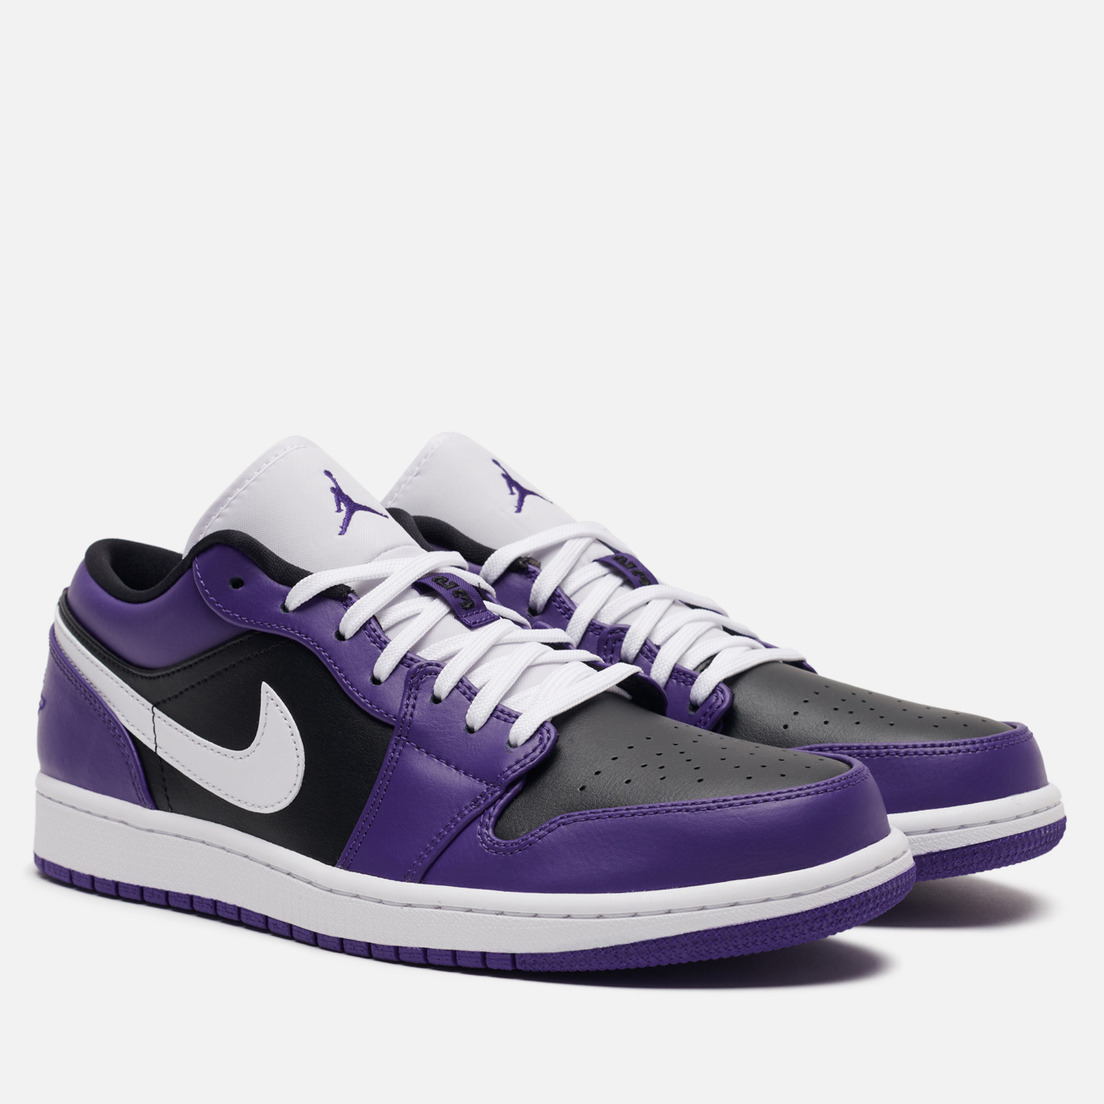 jordan 1 court purple low